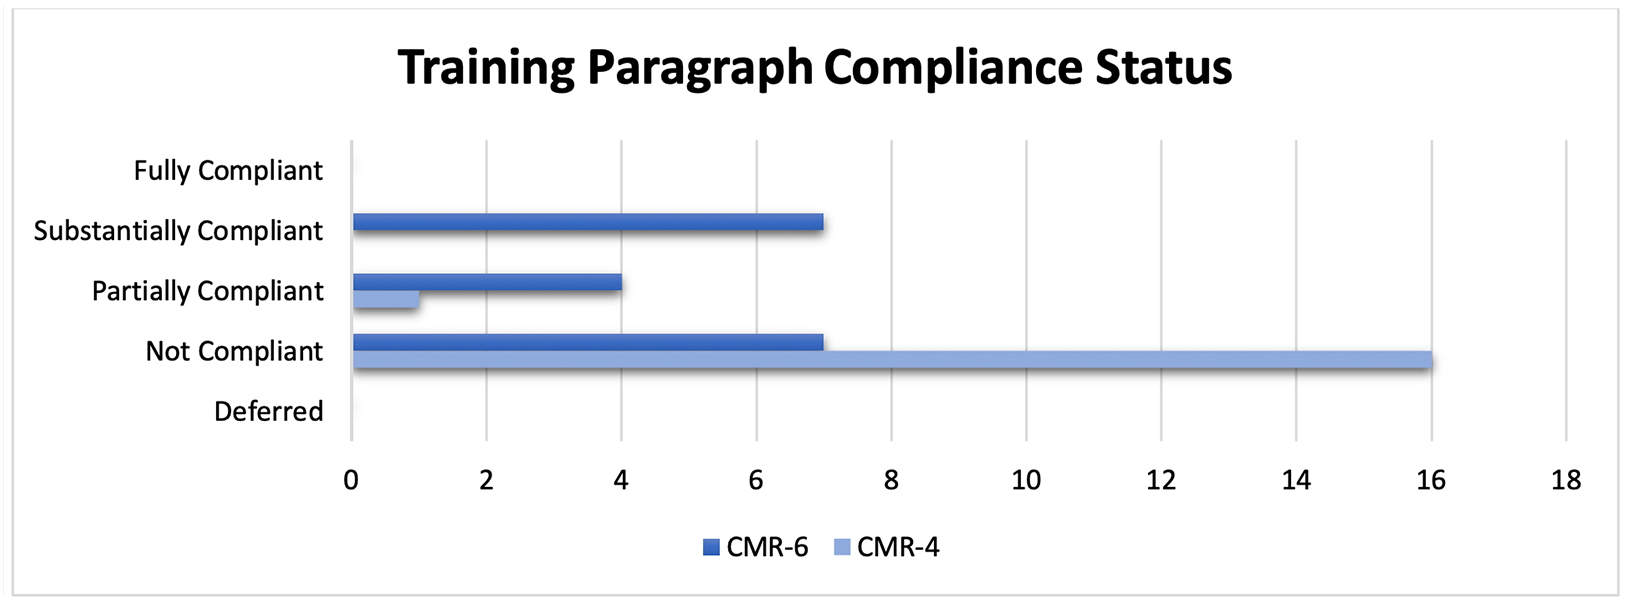 Figure 5. Training: Paragraph Compliance Status